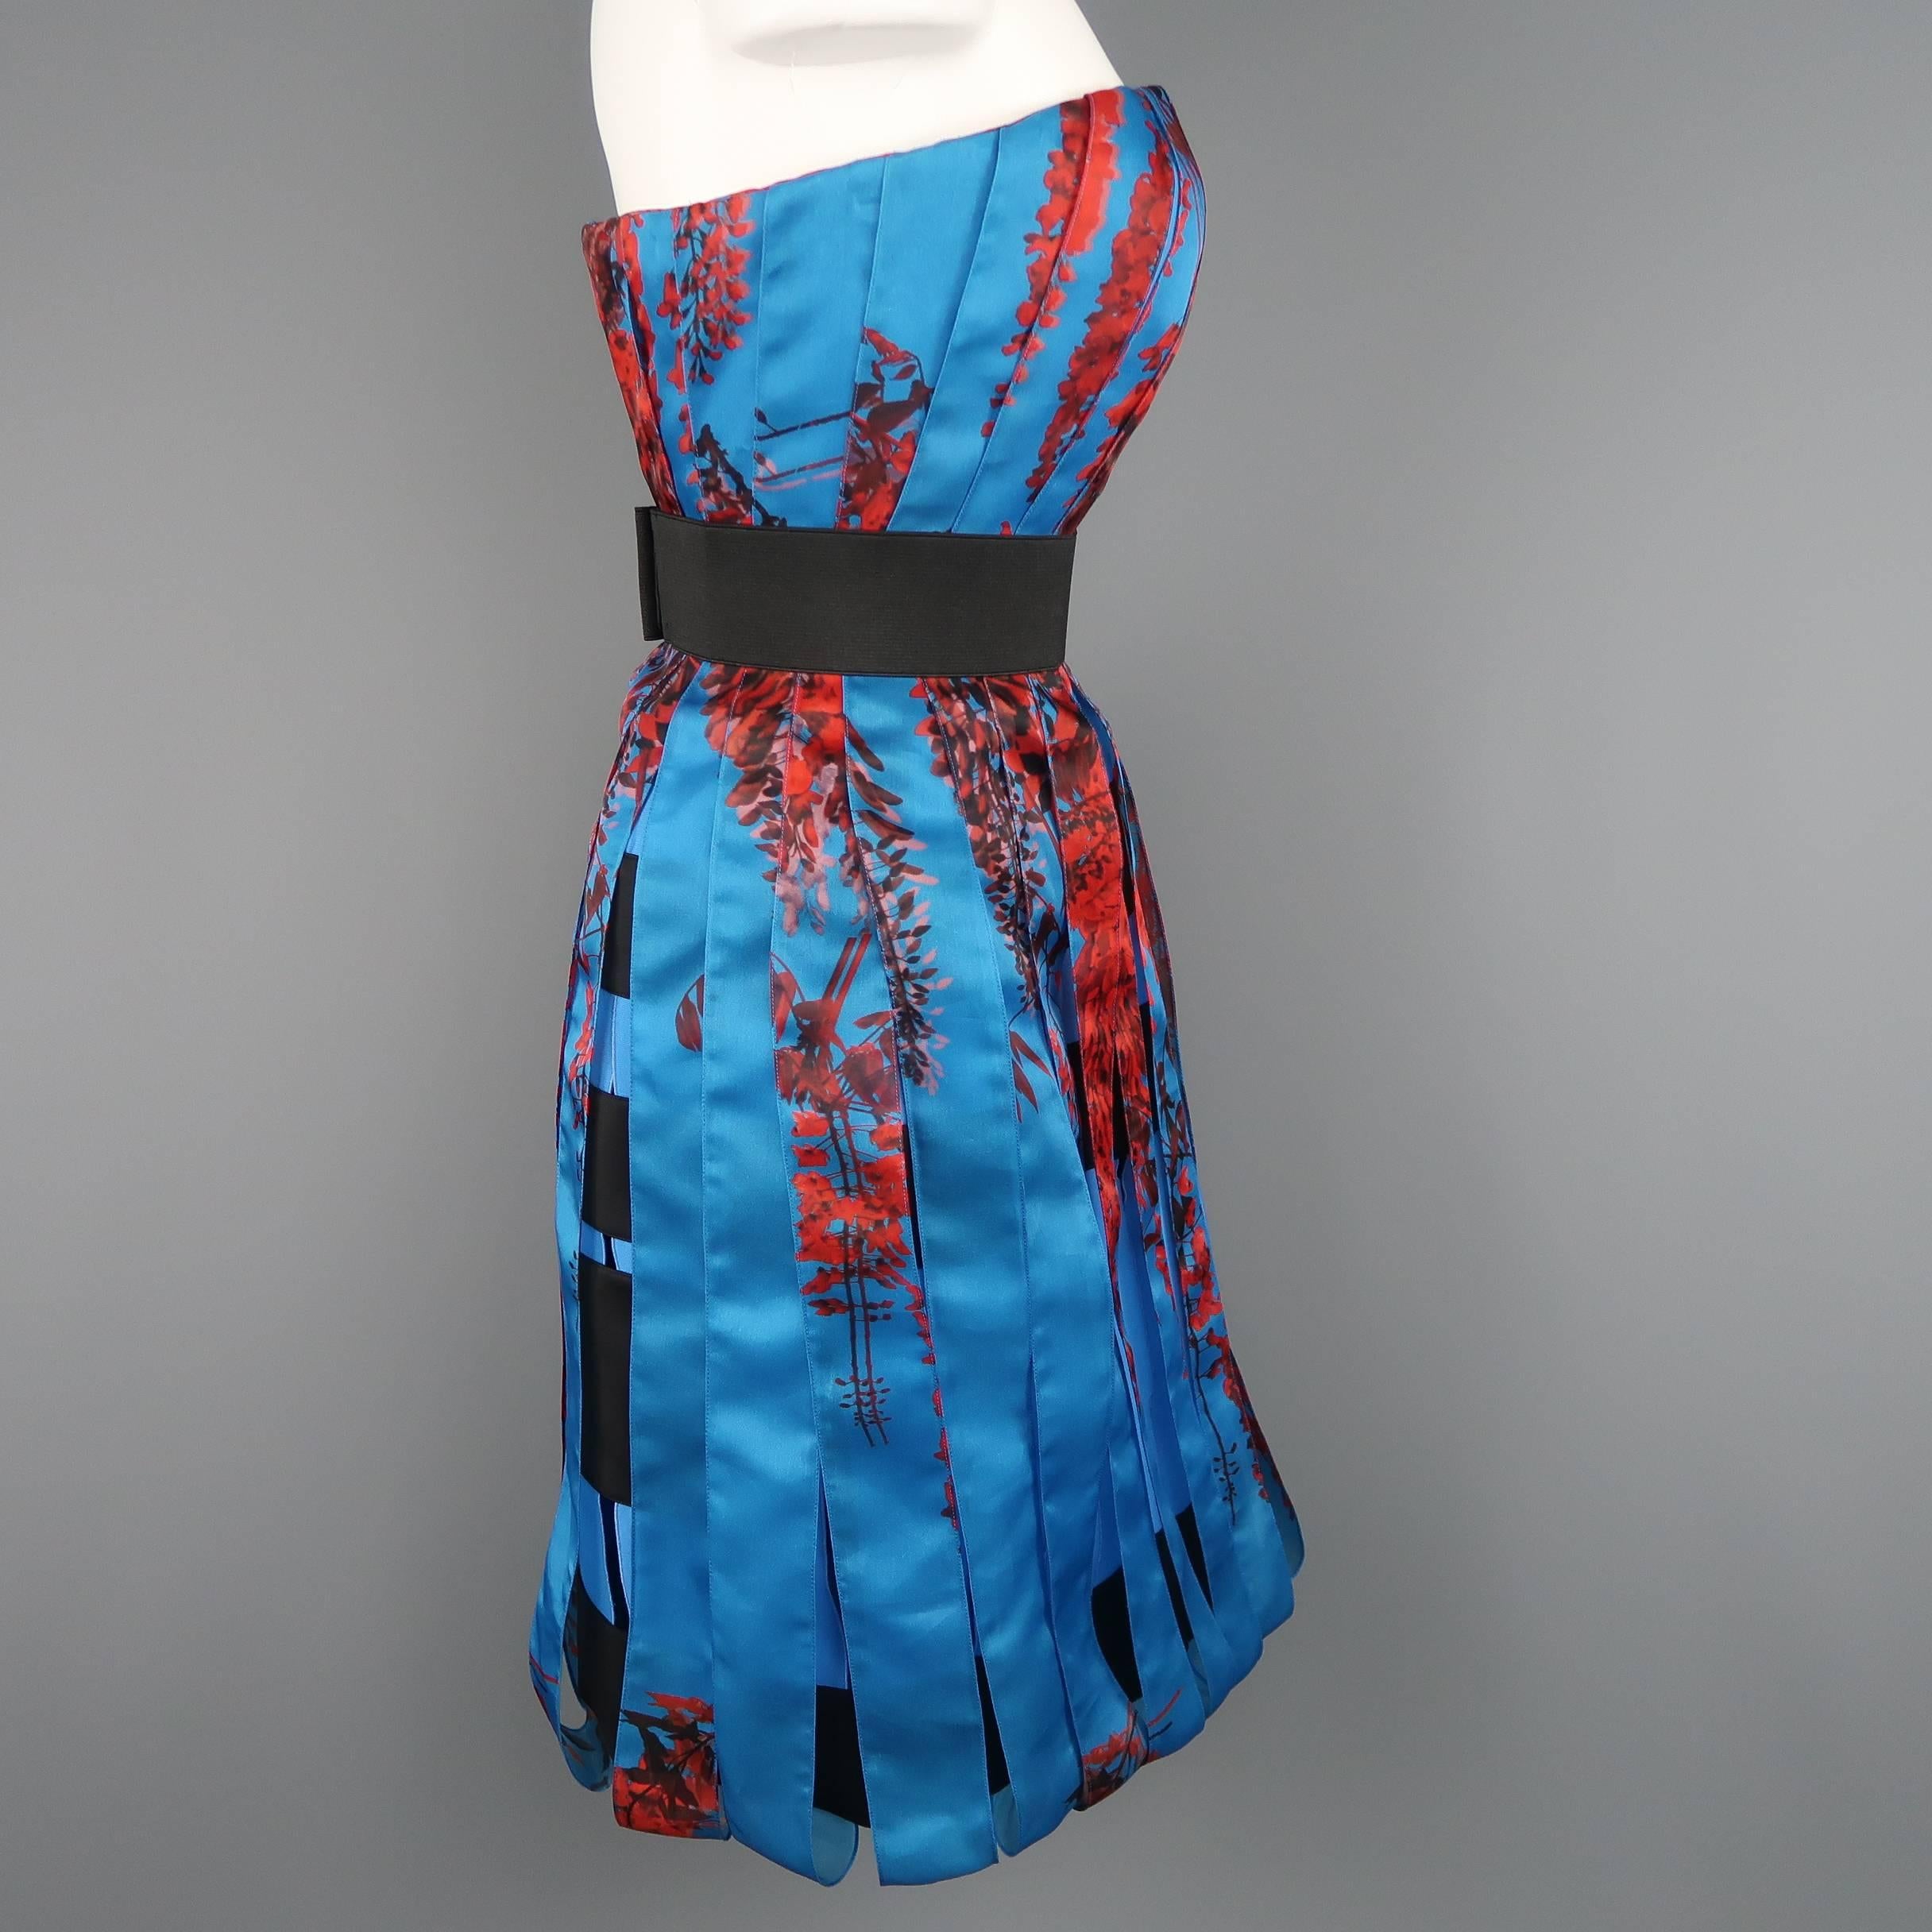 Christian Dior Dress - Spring 2014 Runway - Blue, Red, Floral, Silk, Cocktail 1